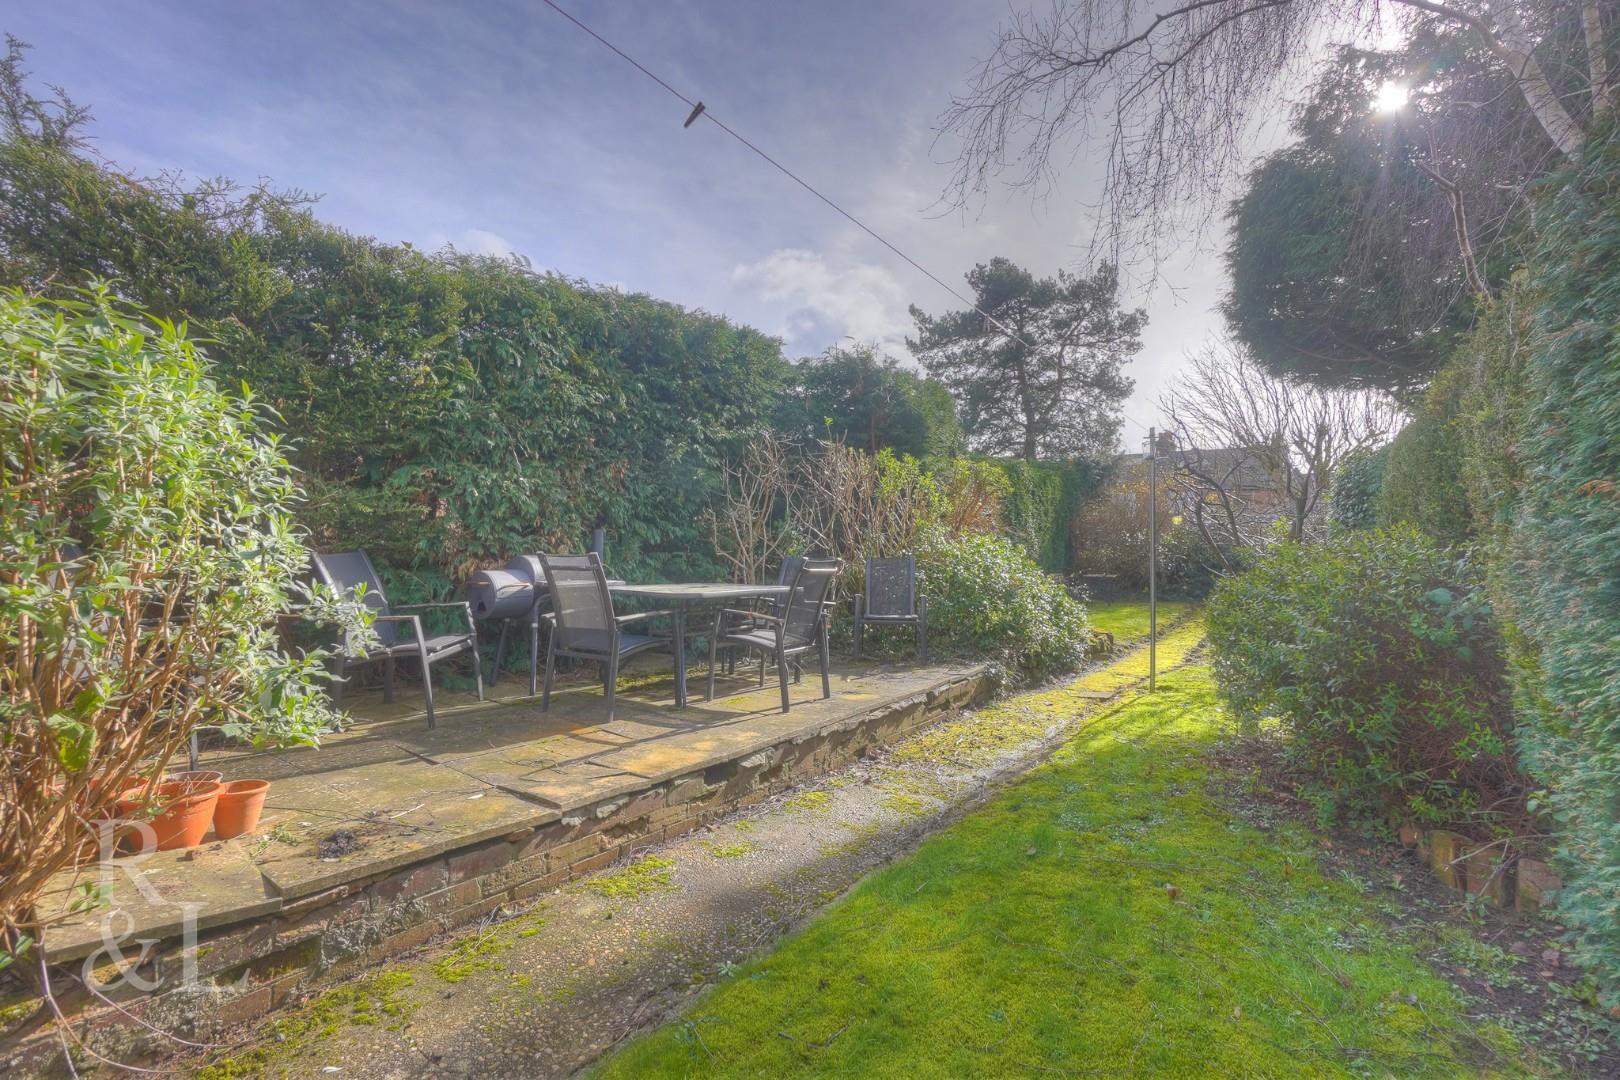 Property image for Mabel Grove, West Bridgford, Nottingham